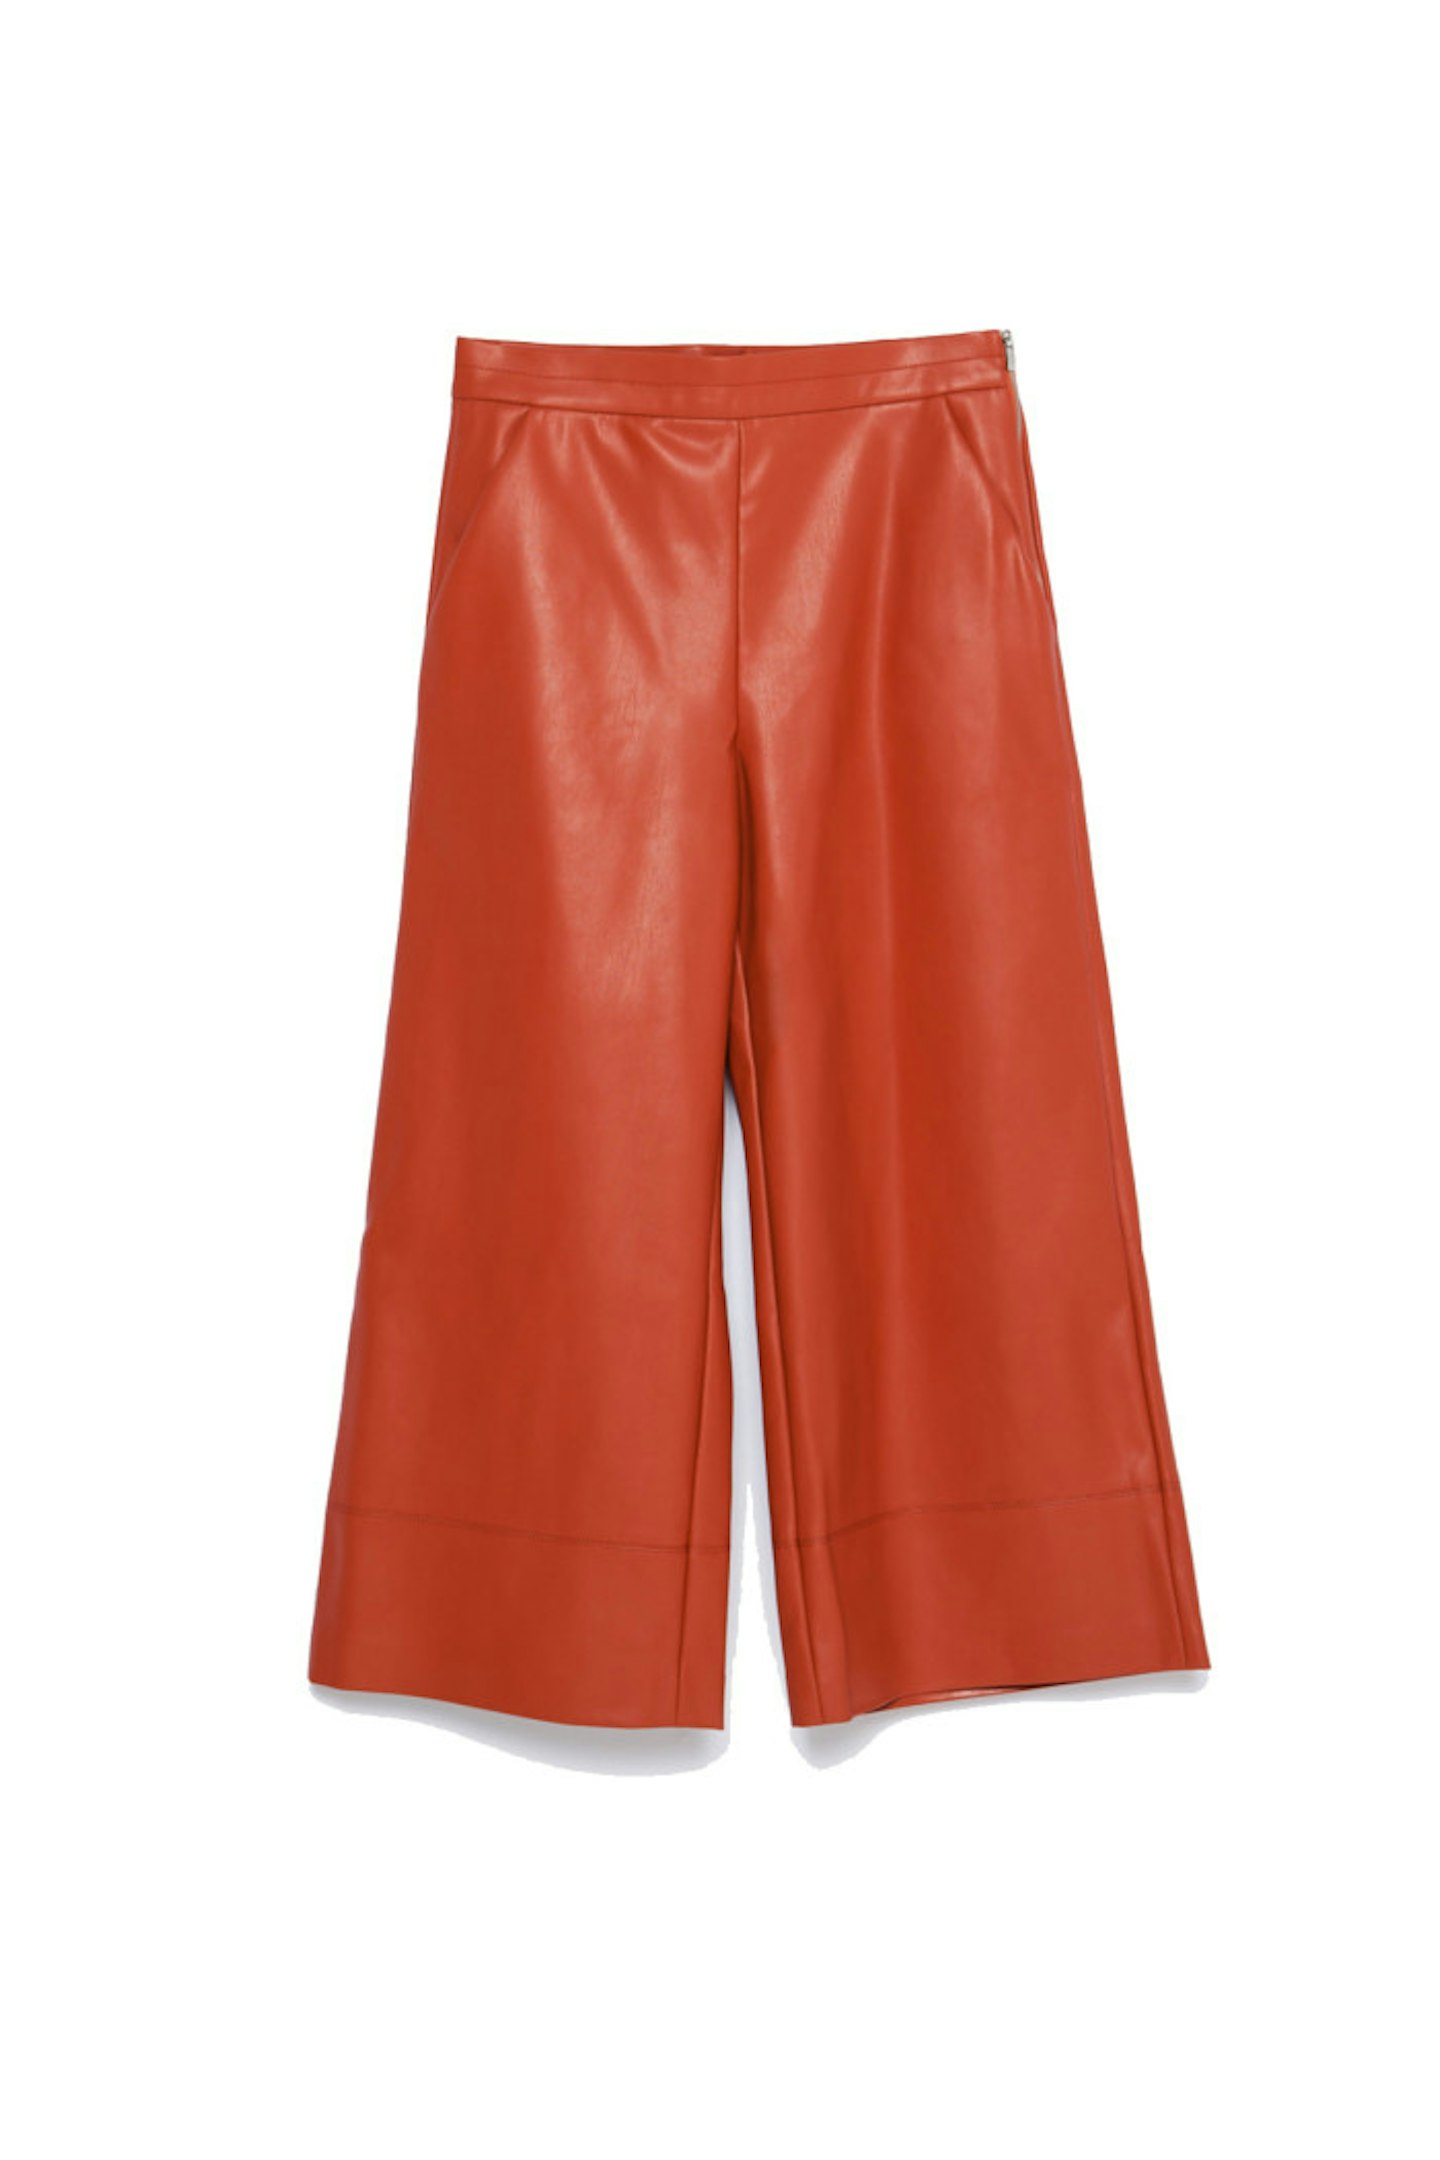 Zara Faux leather culottes, £25.99